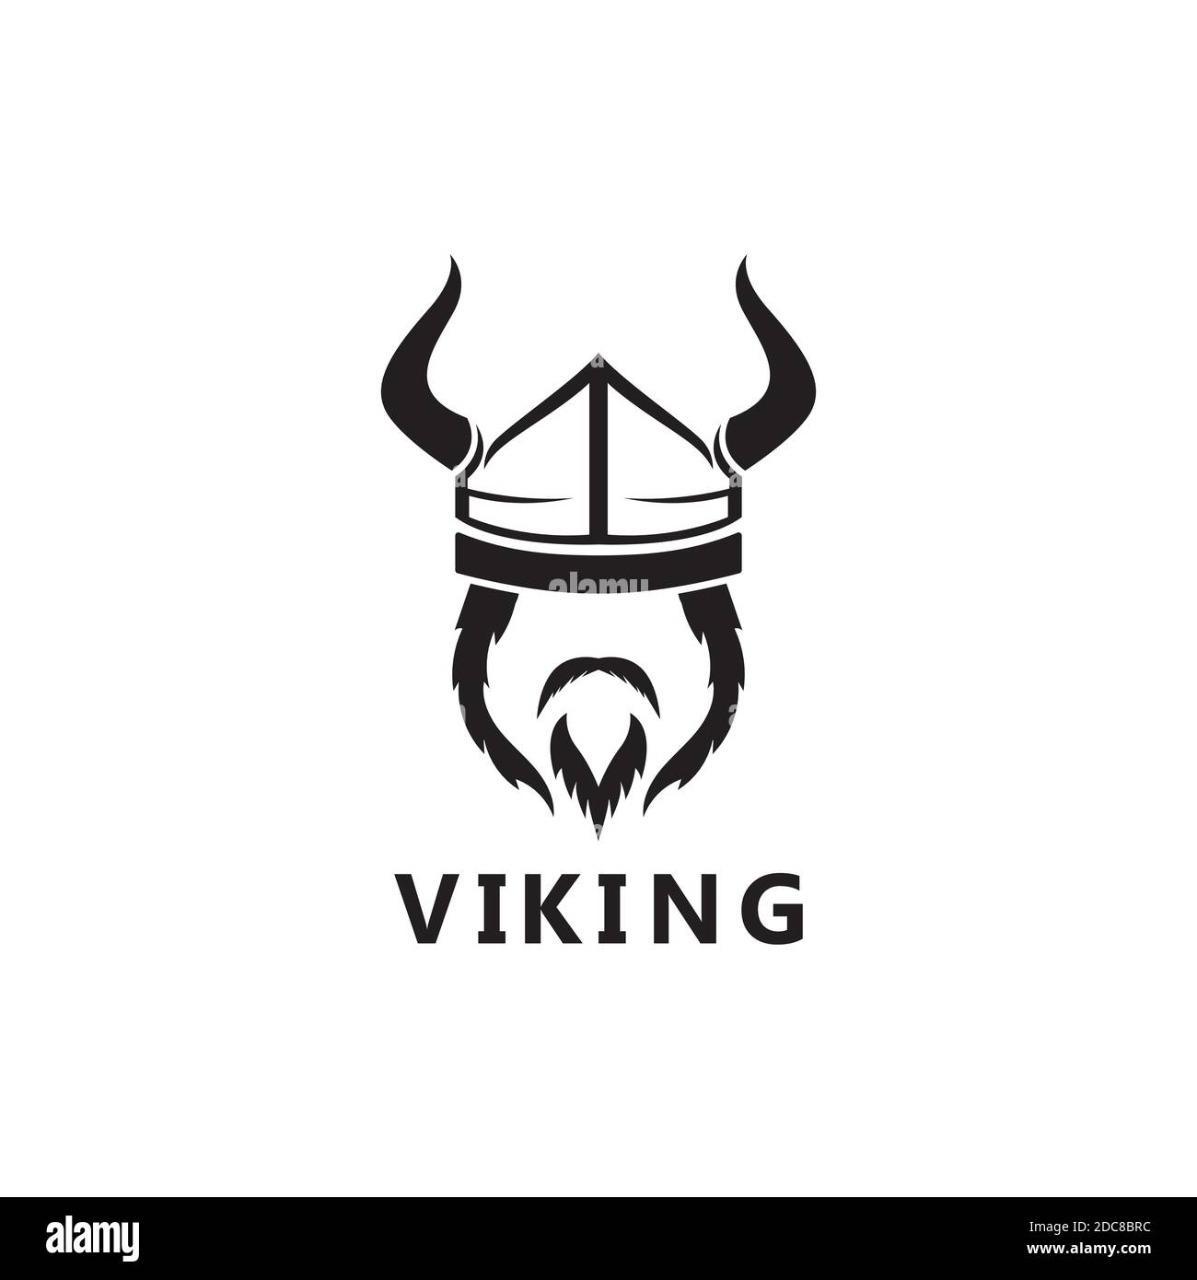 Vikingo95?s=8m3ko+yn45a1lvdz5+zqqho7kmbsytt8wvhovtgzxqk=